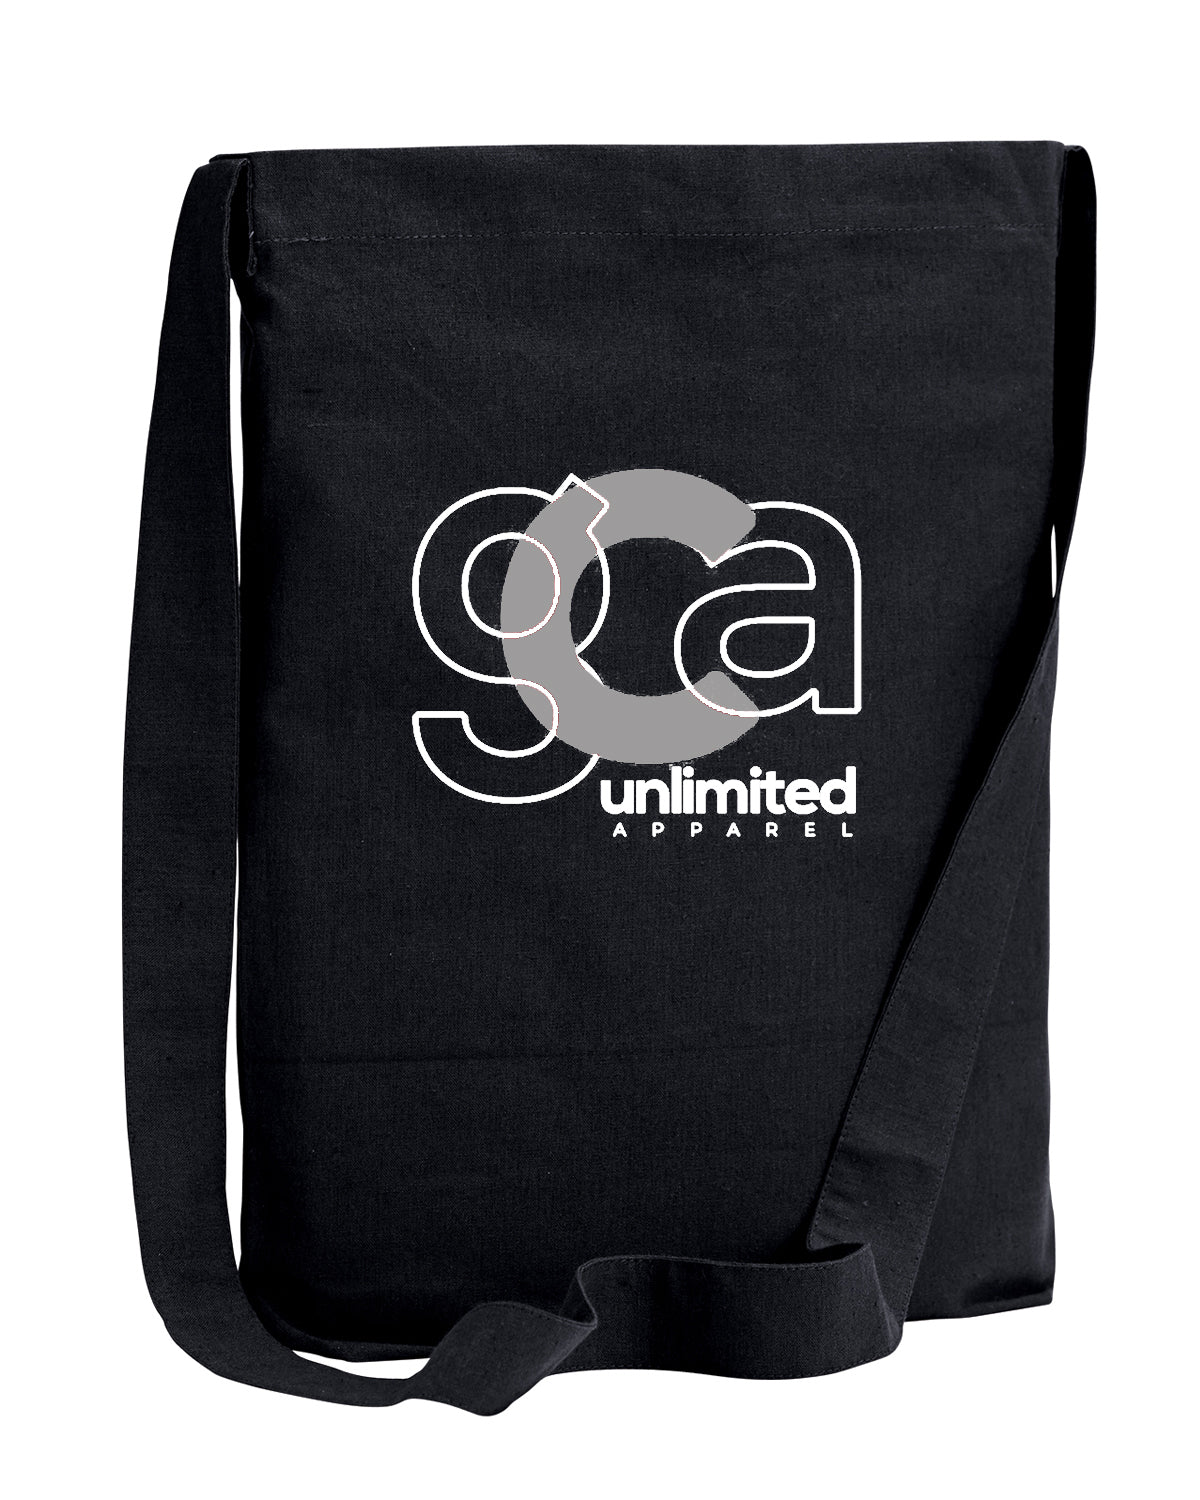 GCA Unlimited Apparel "Brand Canvas Sling Bag"